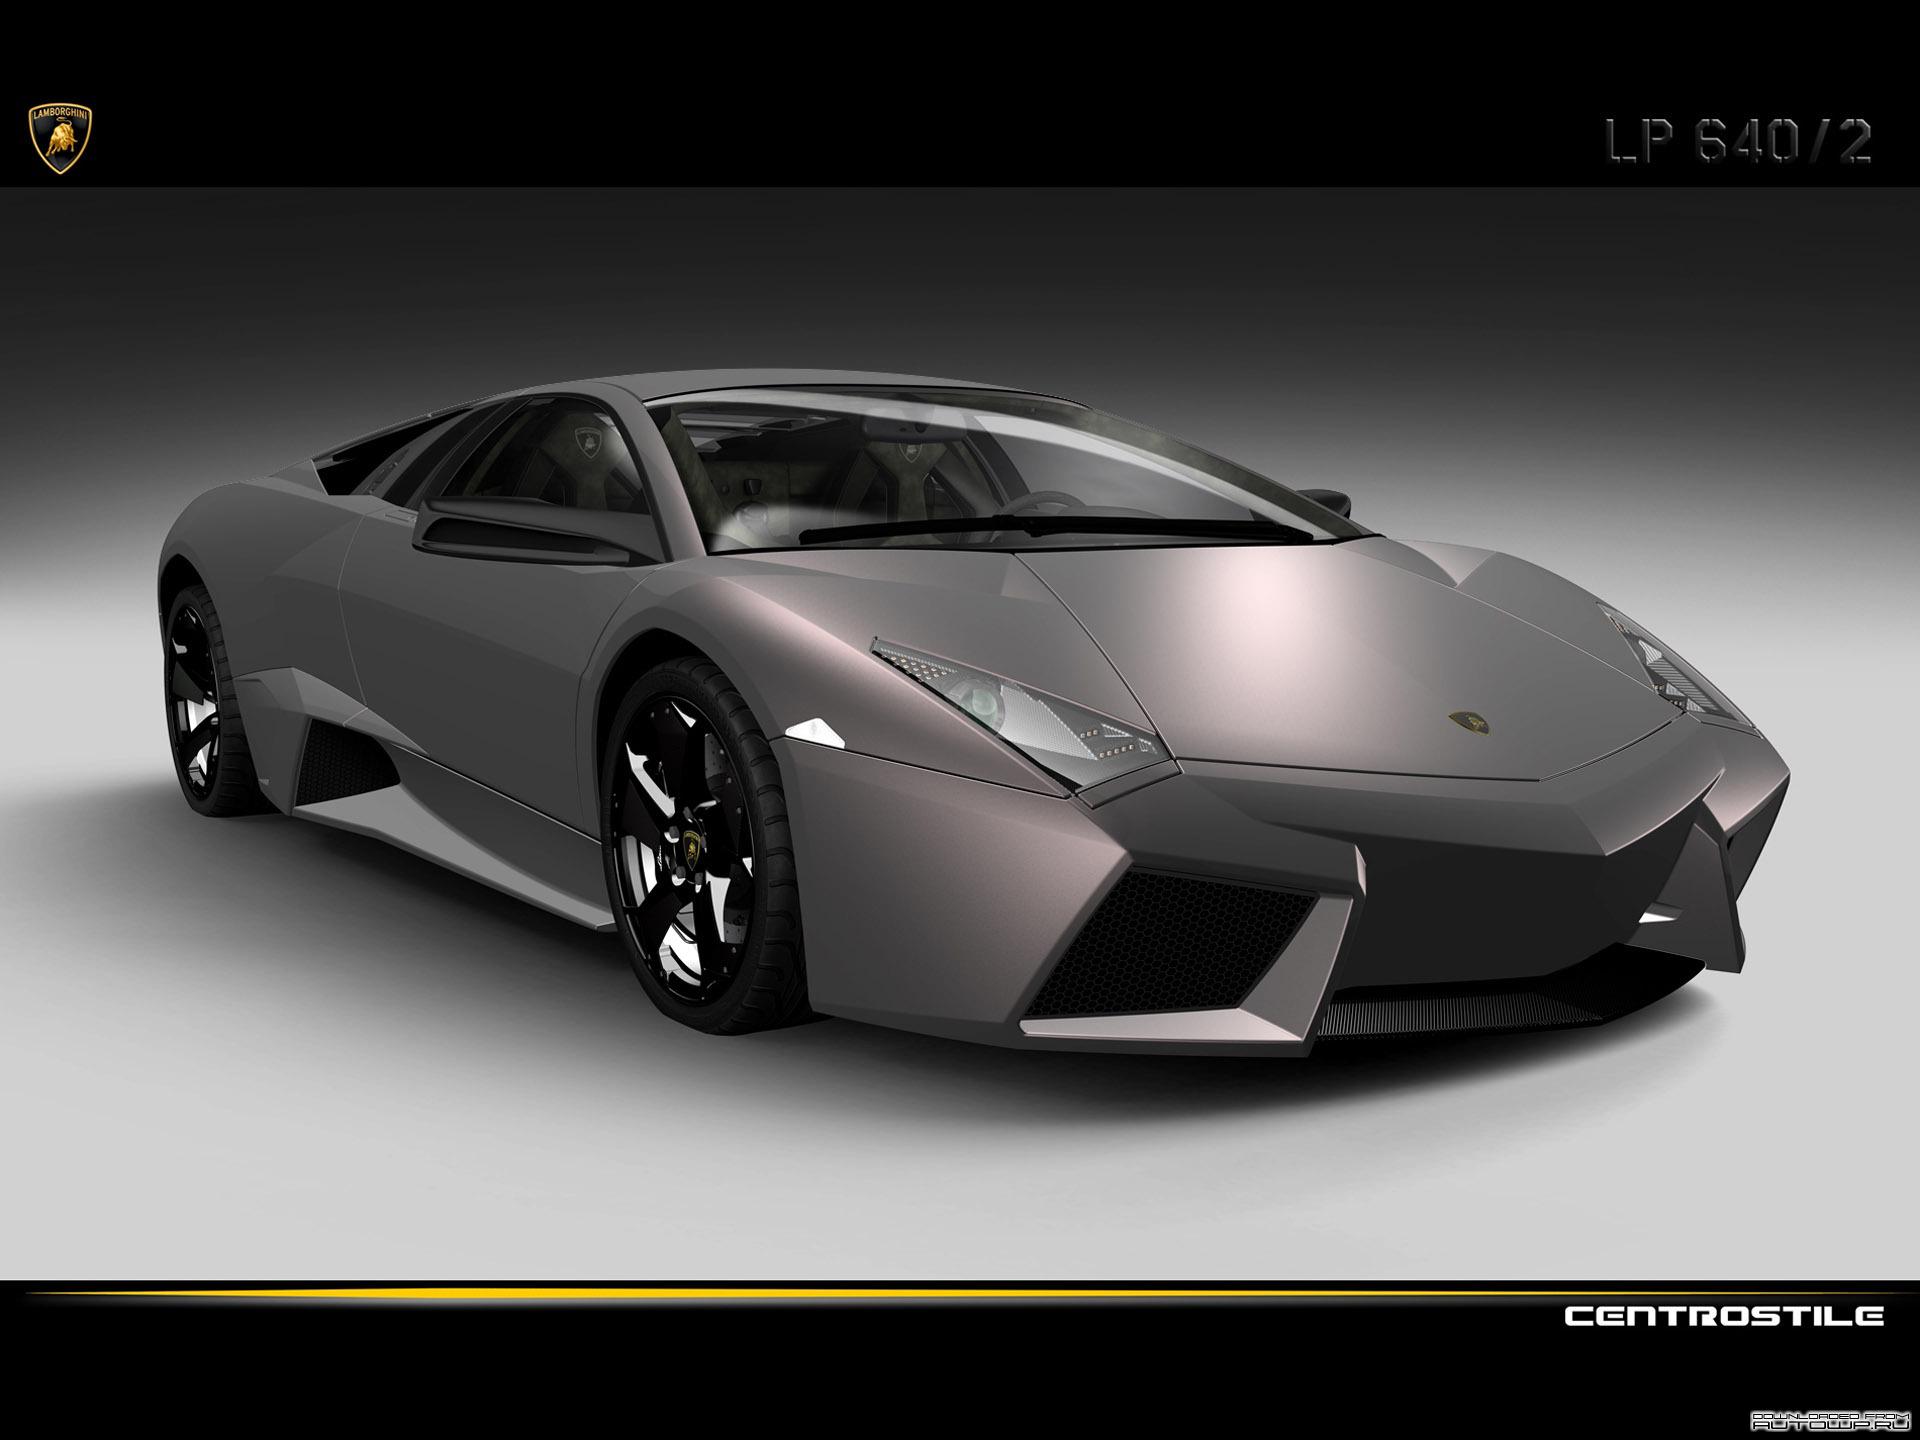 Afbeeldingen Lamborghini auto's Auto automobiel